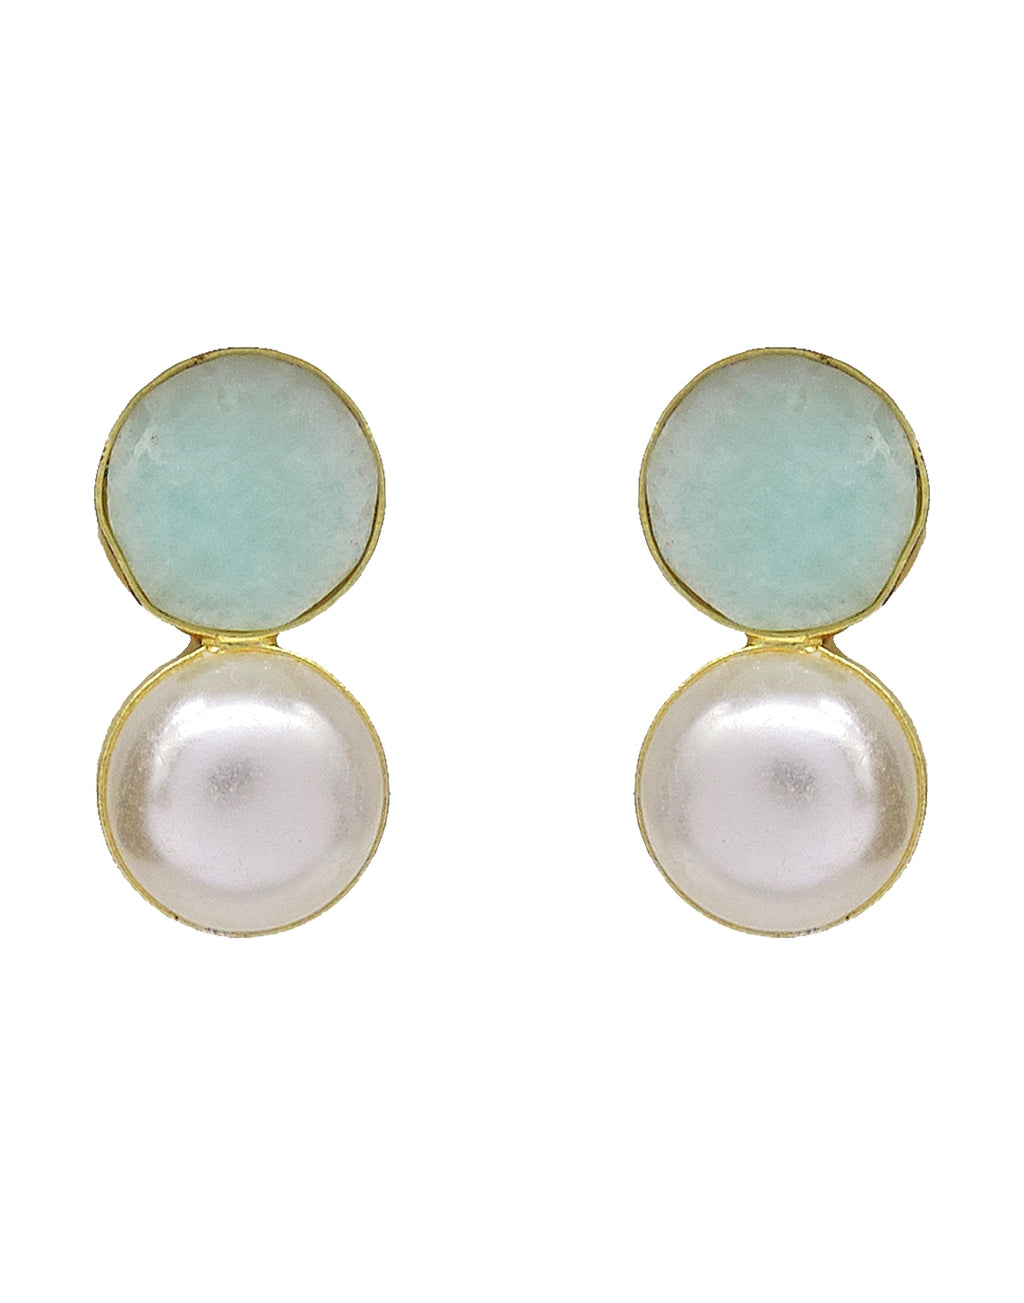 Pearl & Stone Earrings (Amazonite) - Statement Earrings - Gold-Plated & Hypoallergenic Jewellery - Made in India - Dubai Jewellery - Dori